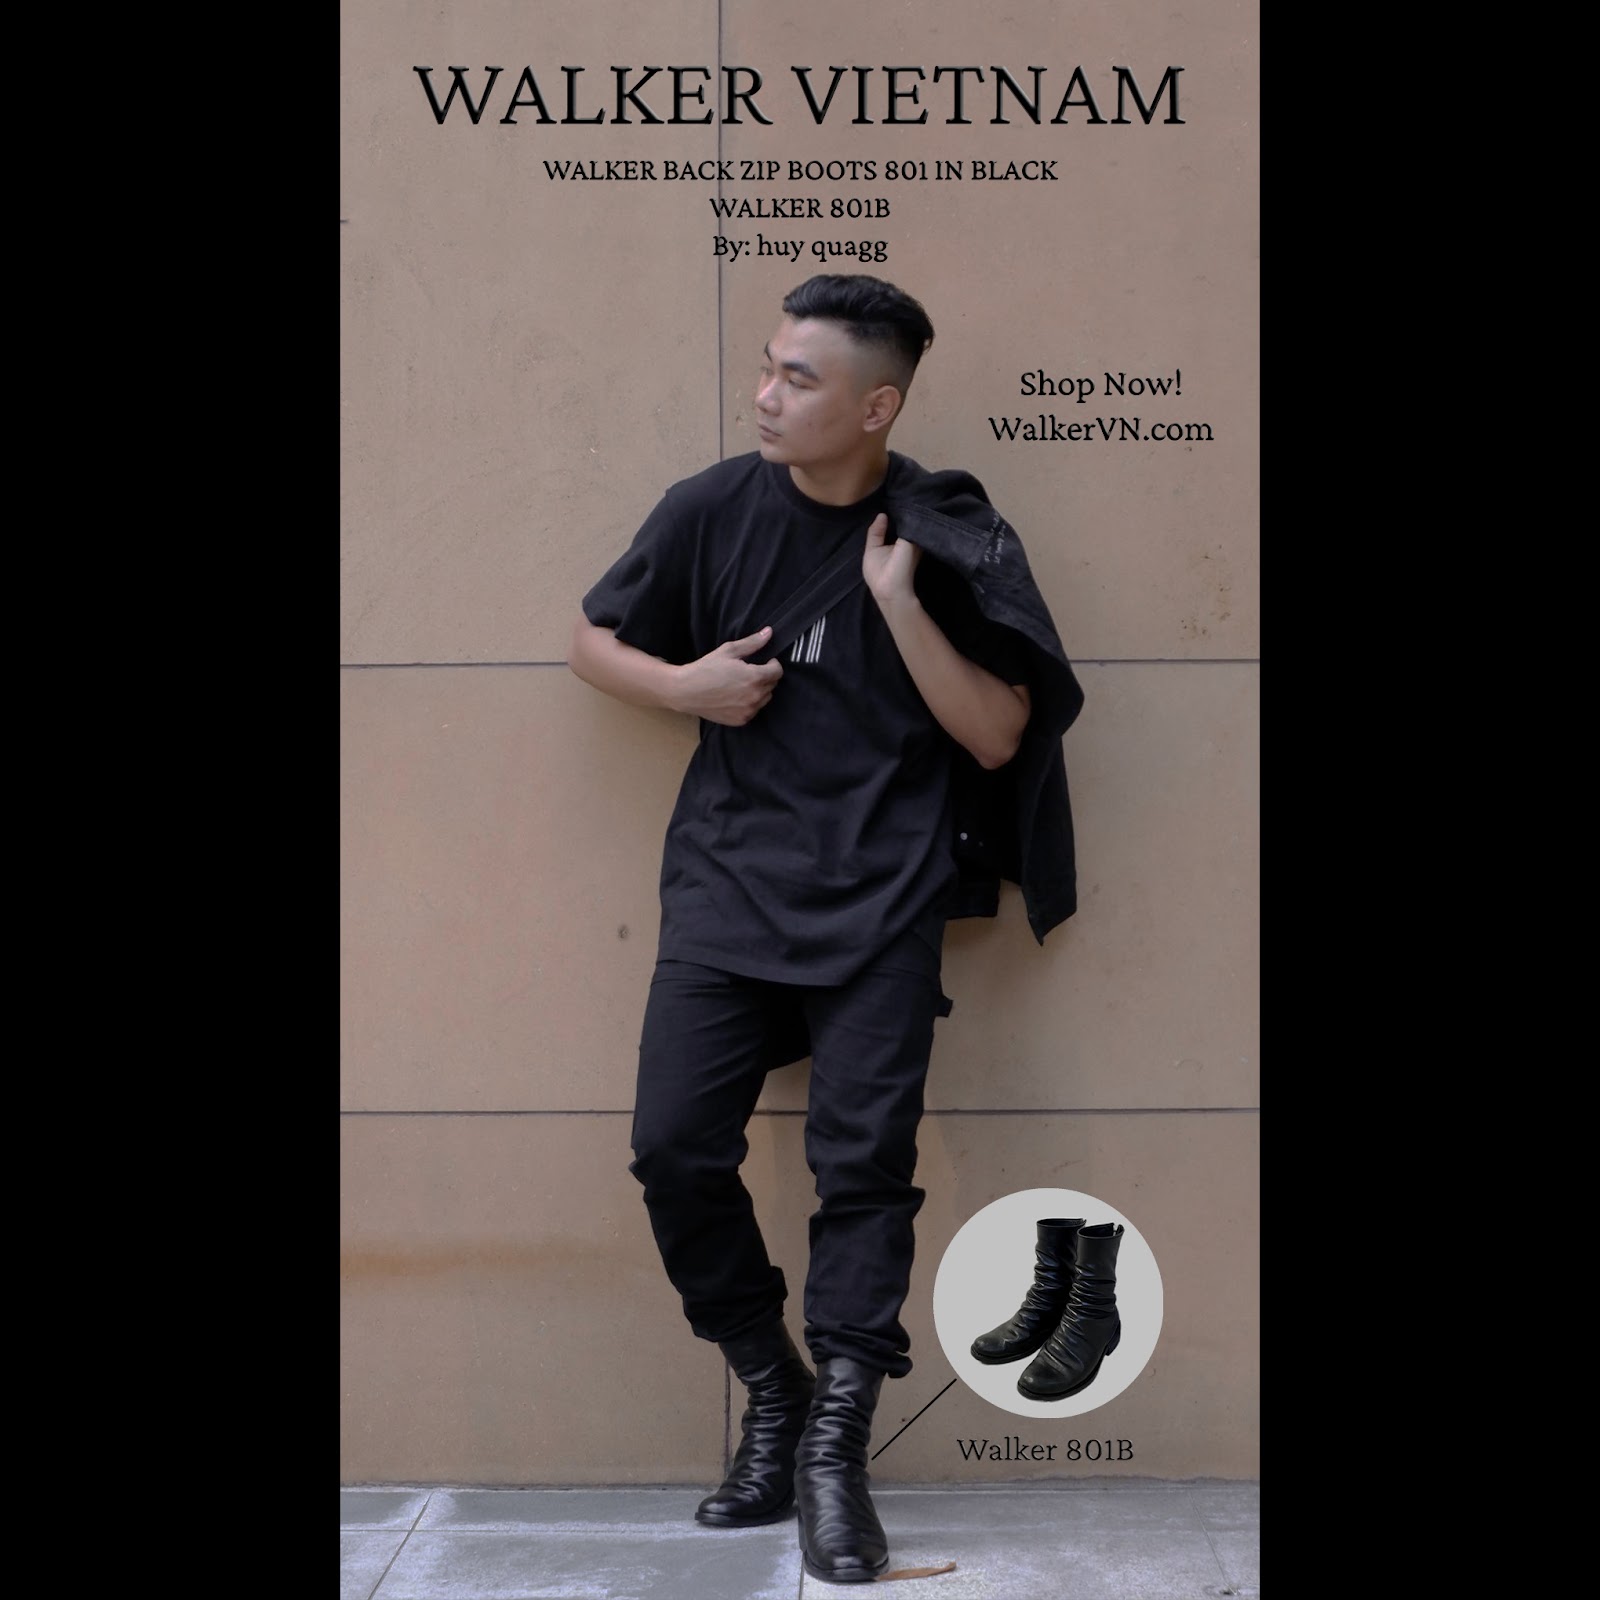 WALKER BACK ZIP BOOTS 801 IN BLACK - WALKER BACK ZIP BOOTS 801 IN BLACK - Walker Vietnam Pic0